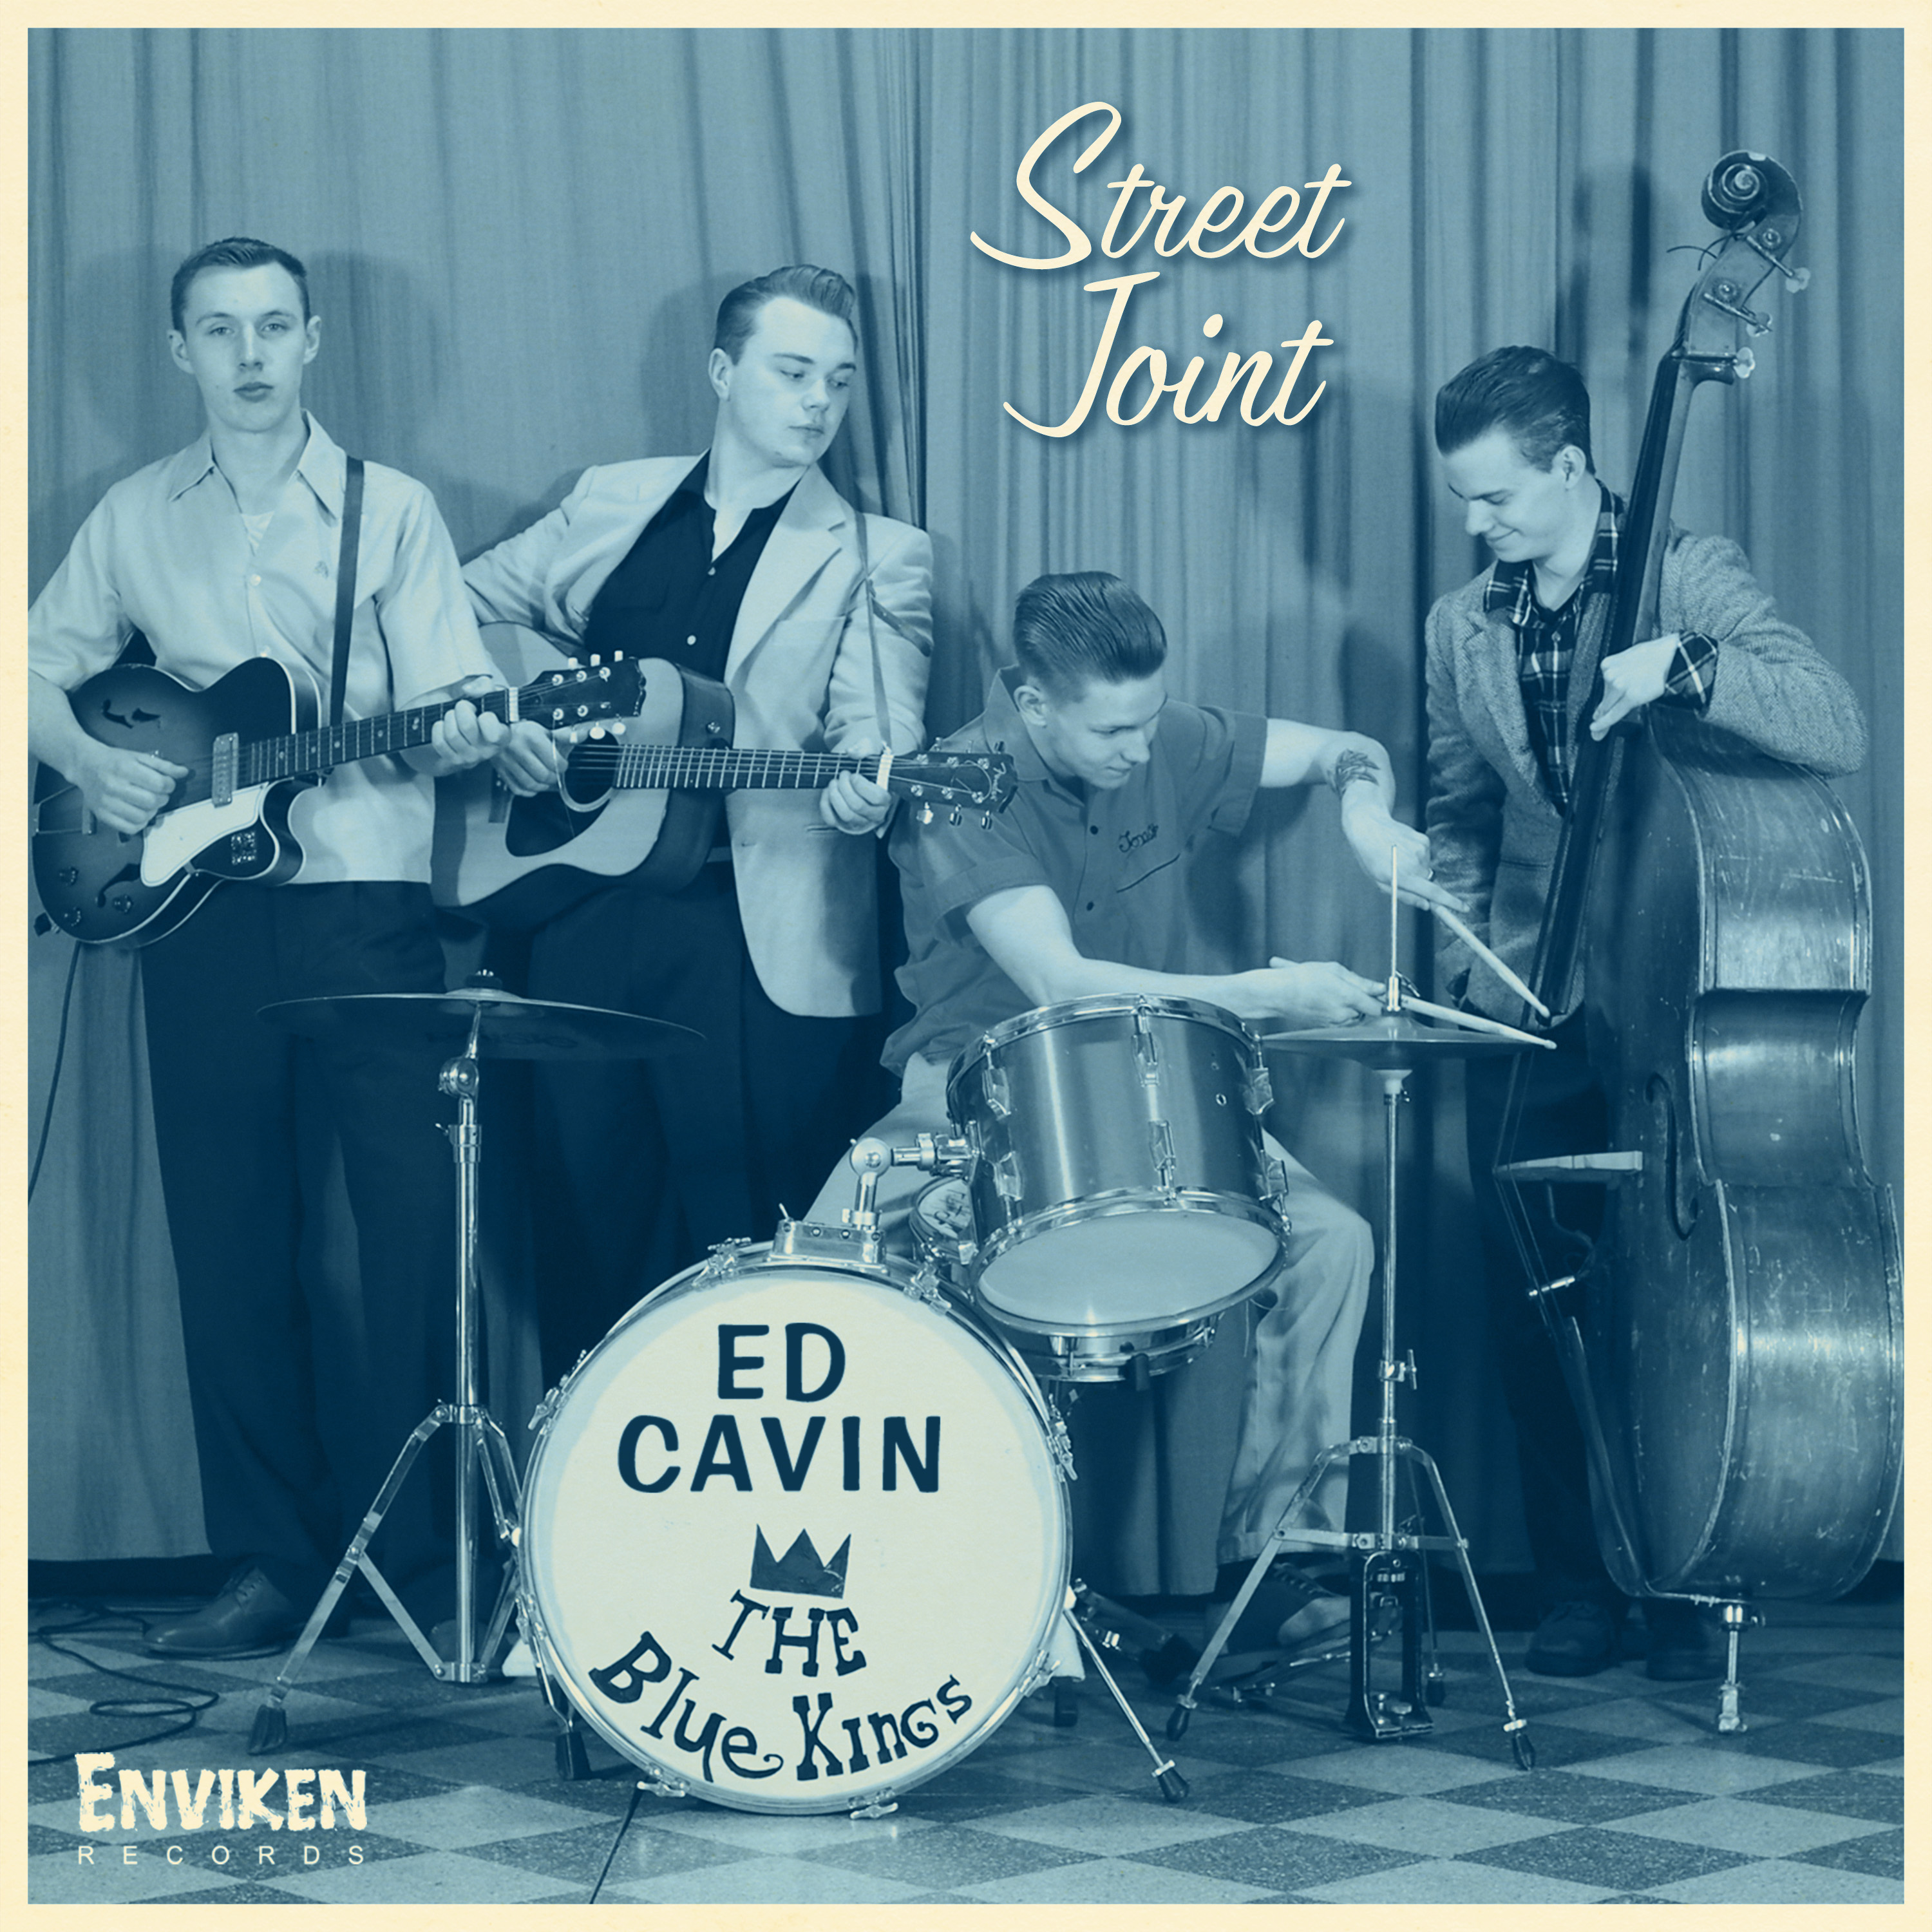 Ed Cavin & The Blue Kings - Street Joint - CD